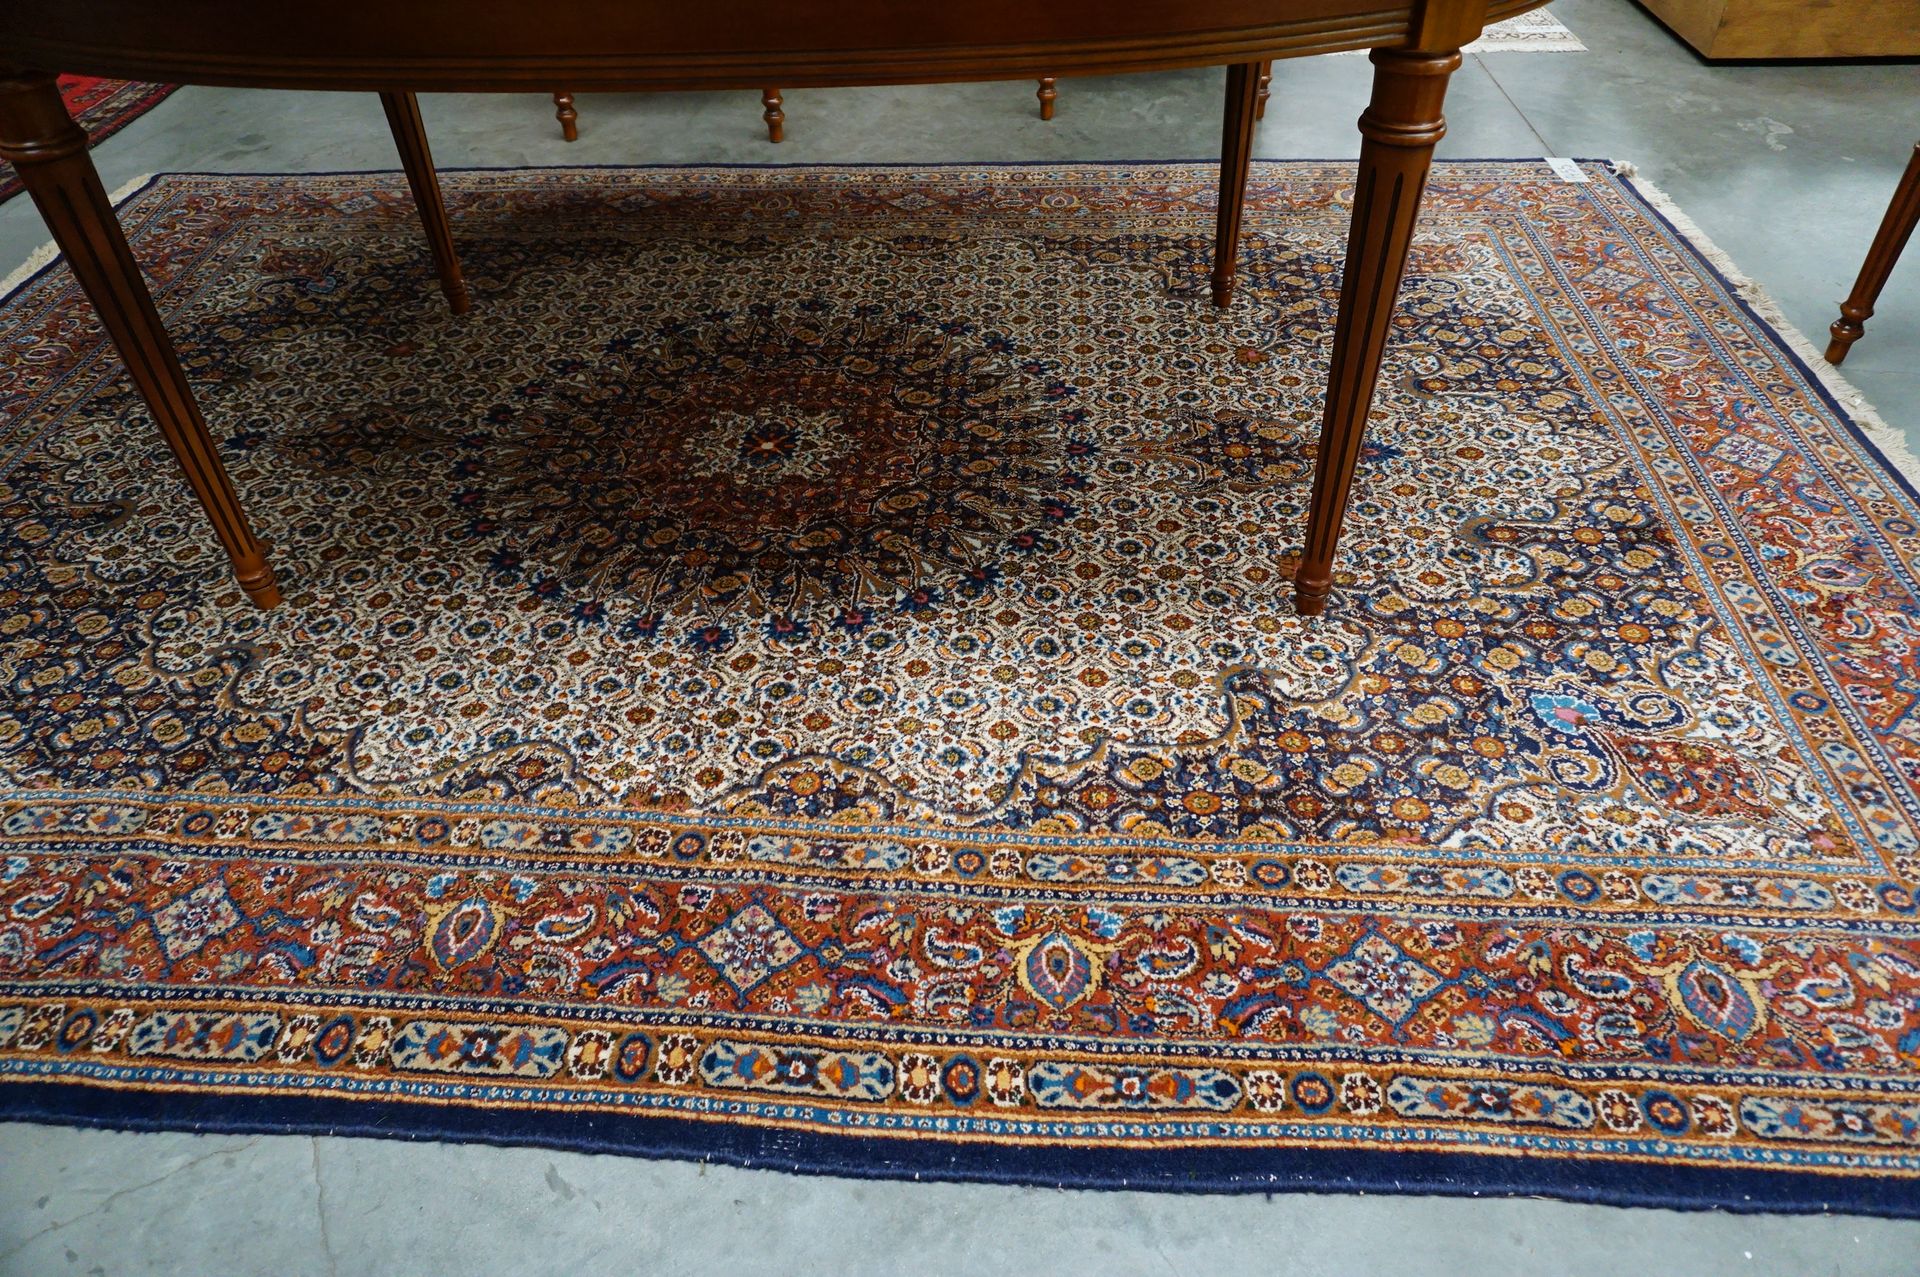 Null Iranian carpet - 2.90 x 2.01